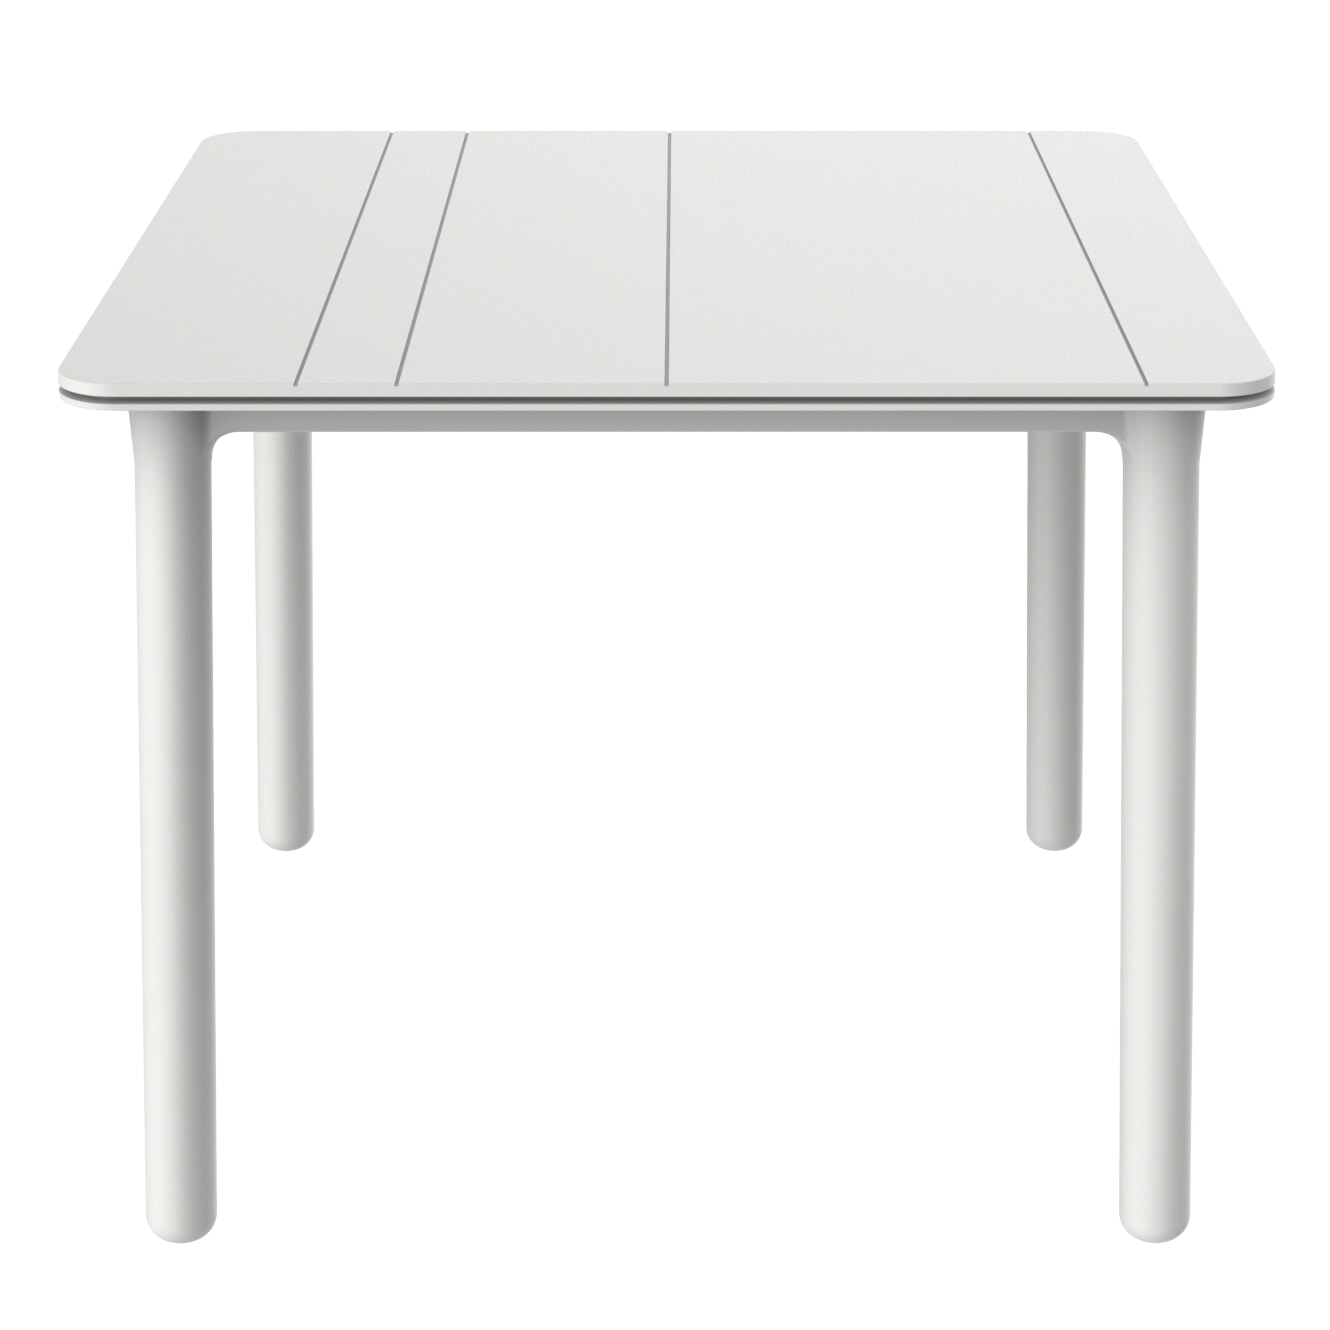 Garbar noa vierkante tafel 90x90 wit voet wit bord